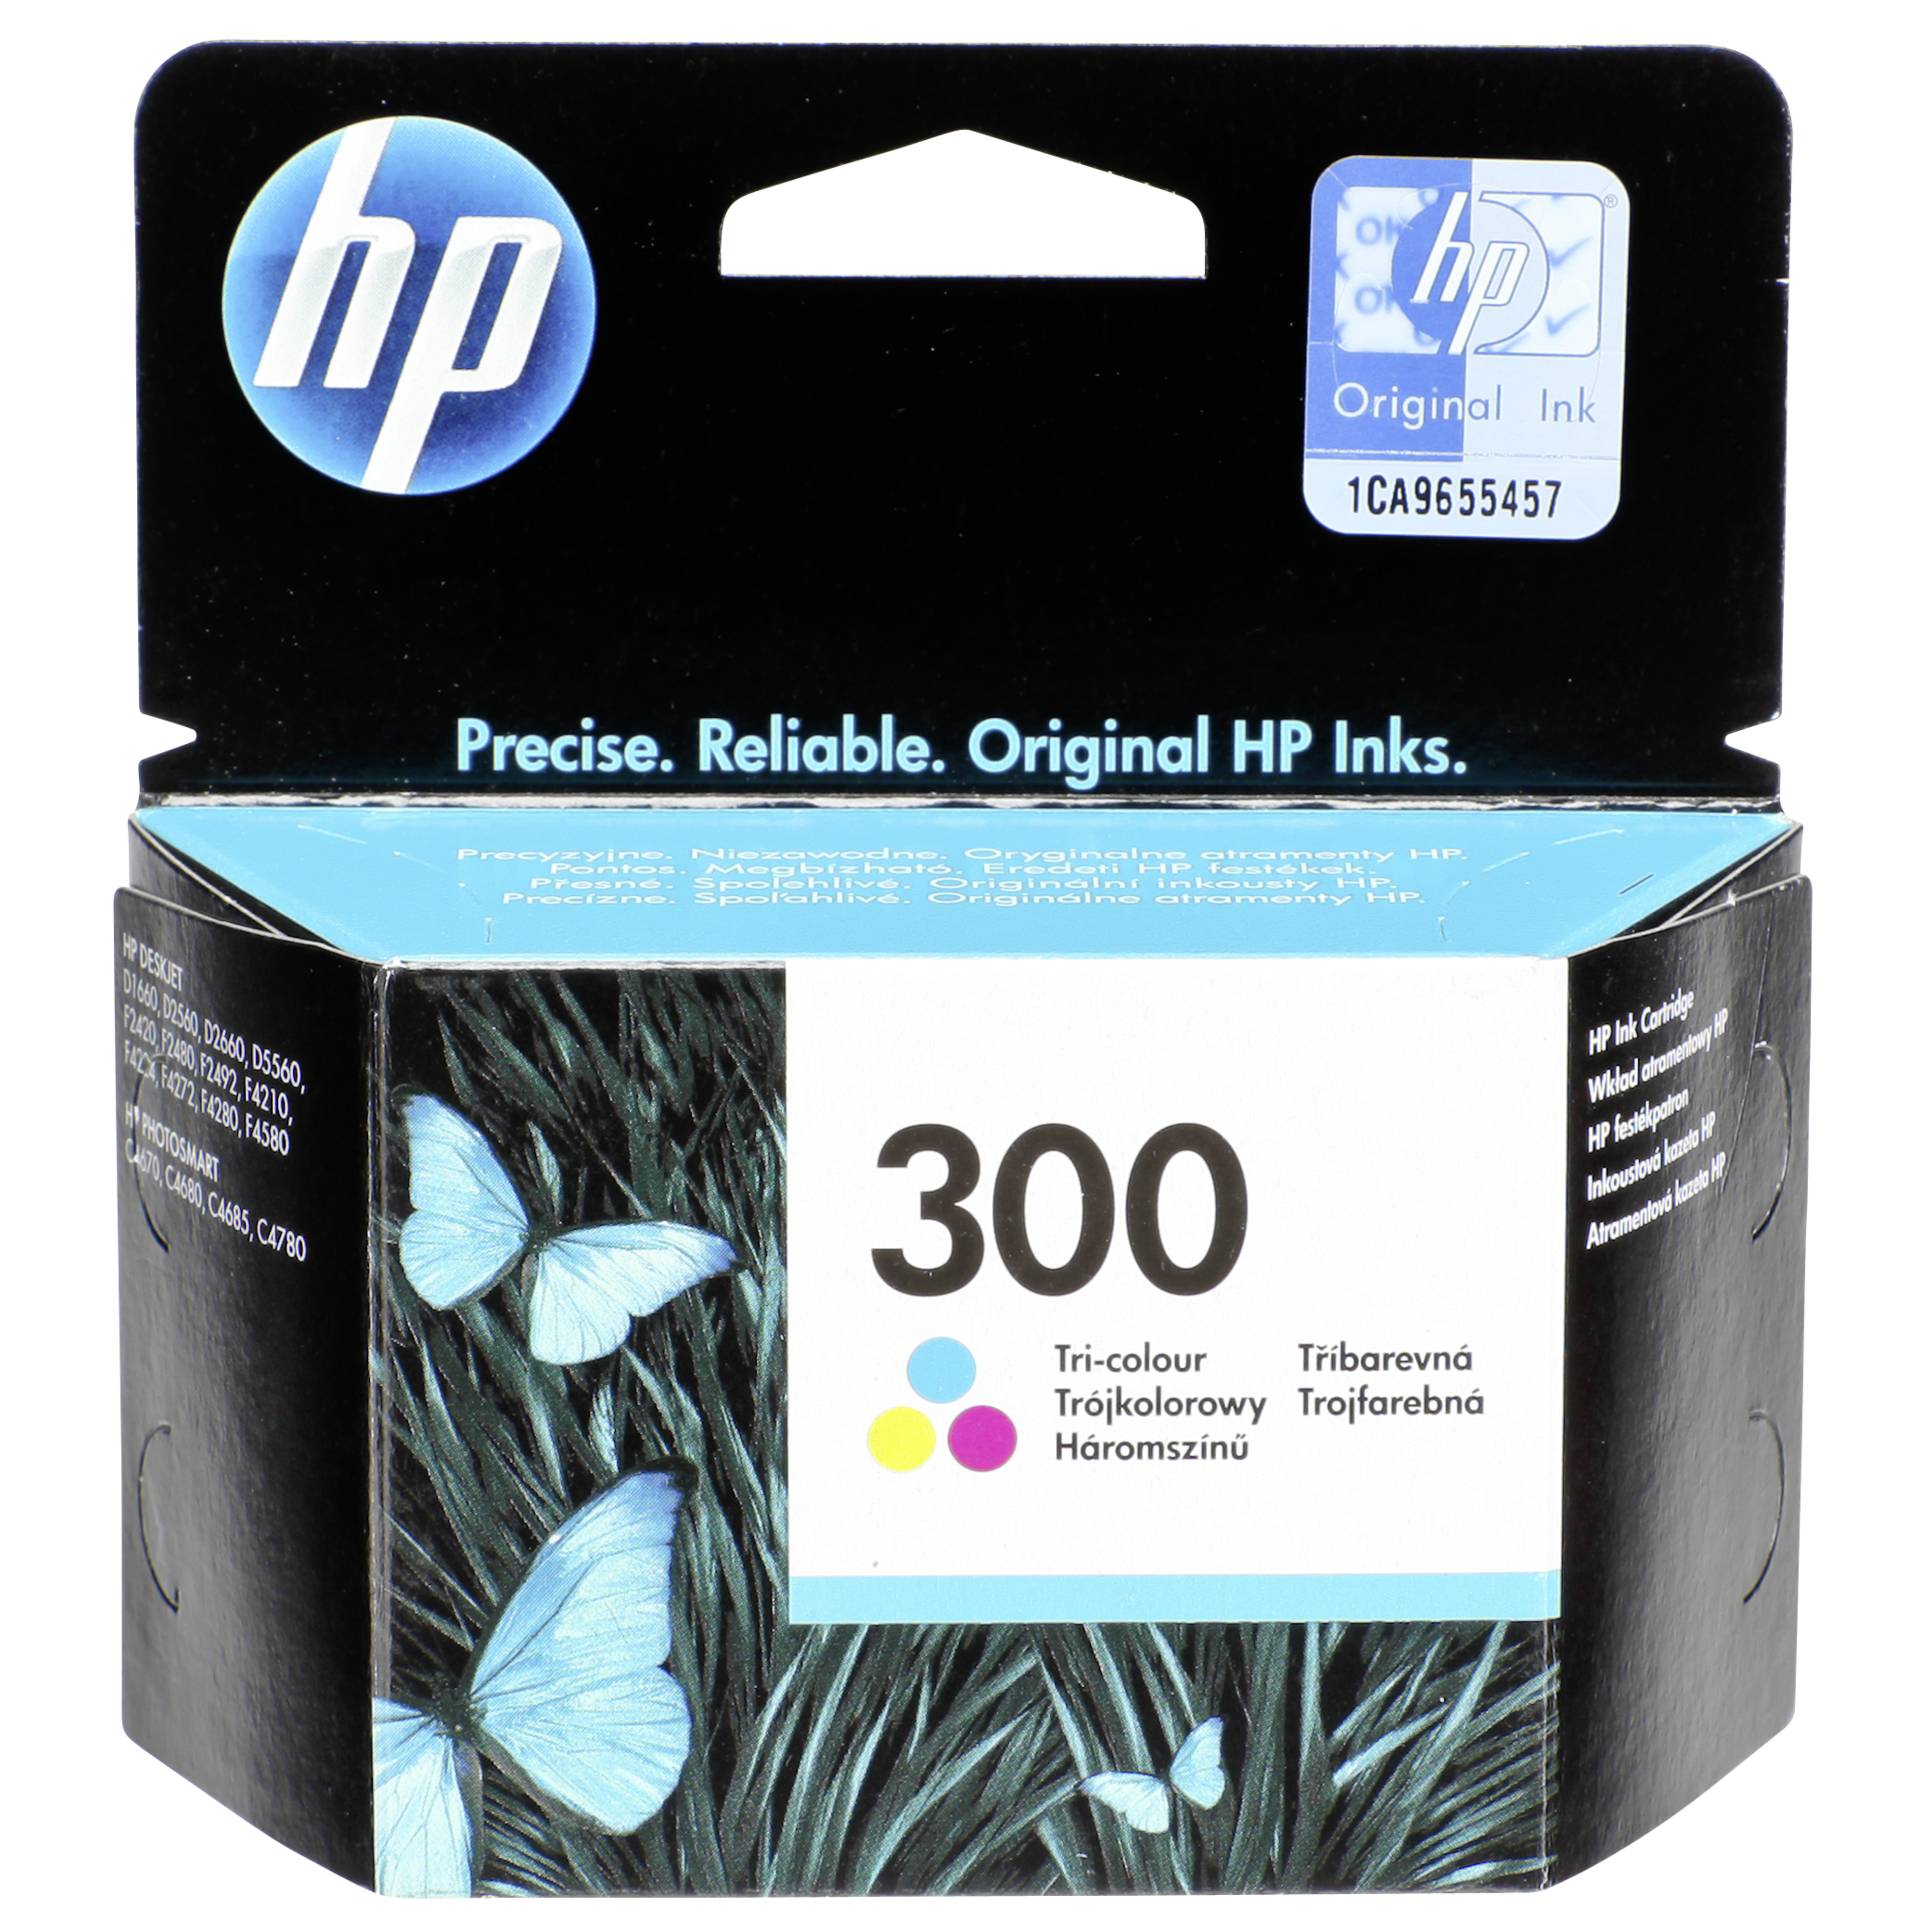 HP Druckkopf mit Tinte 300 dreifarbig 